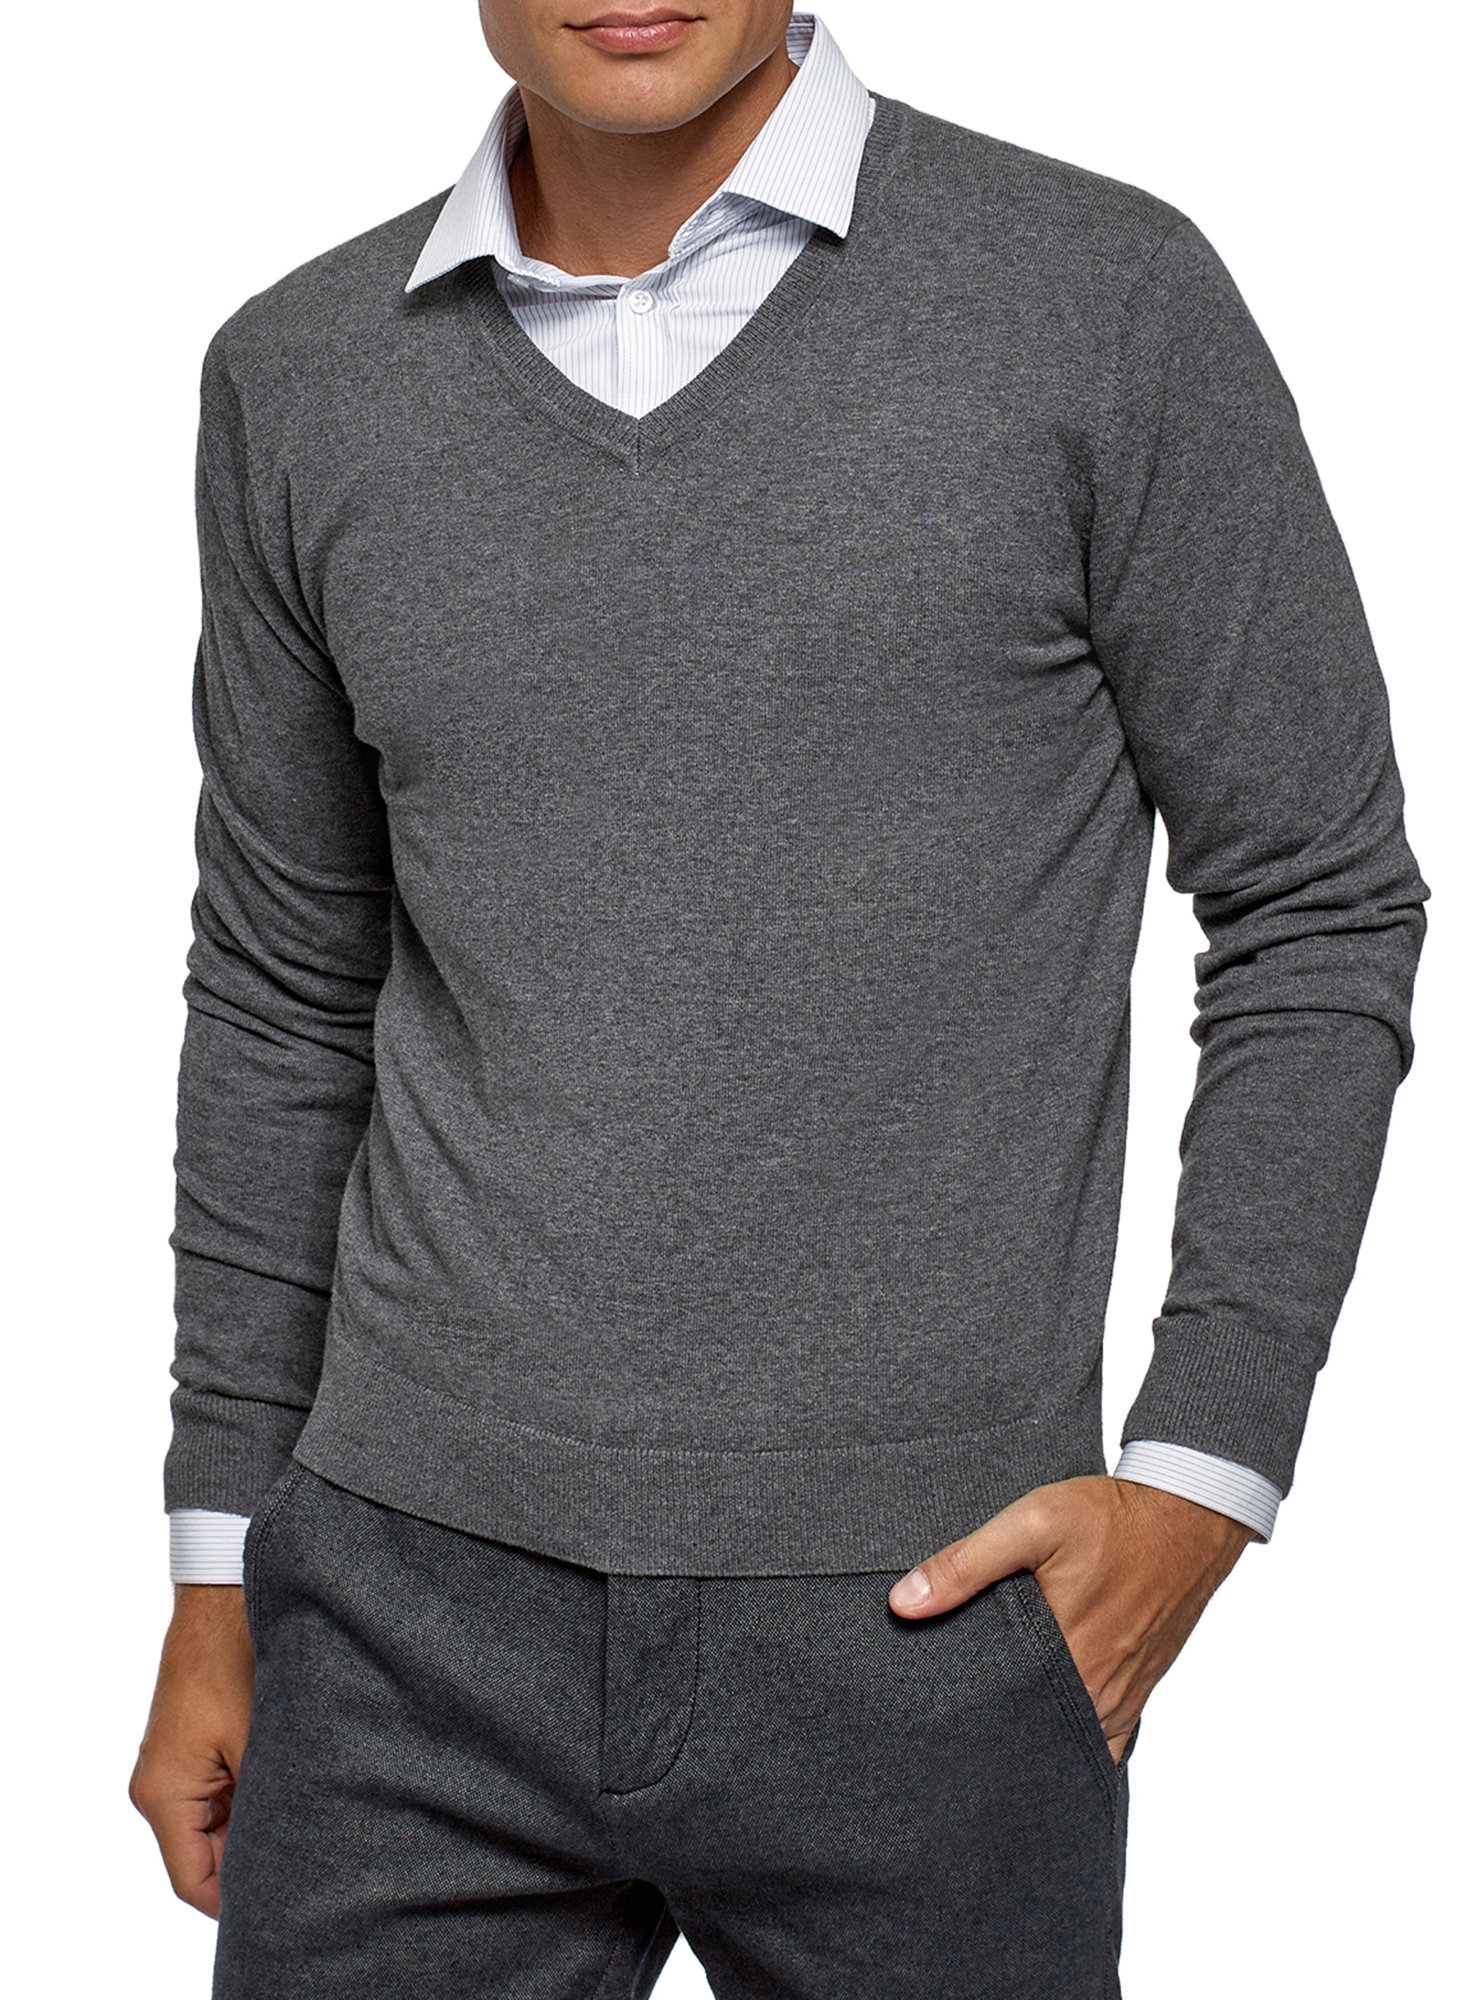 Пуловер мужской oodji 4B212007M-1 серый XL